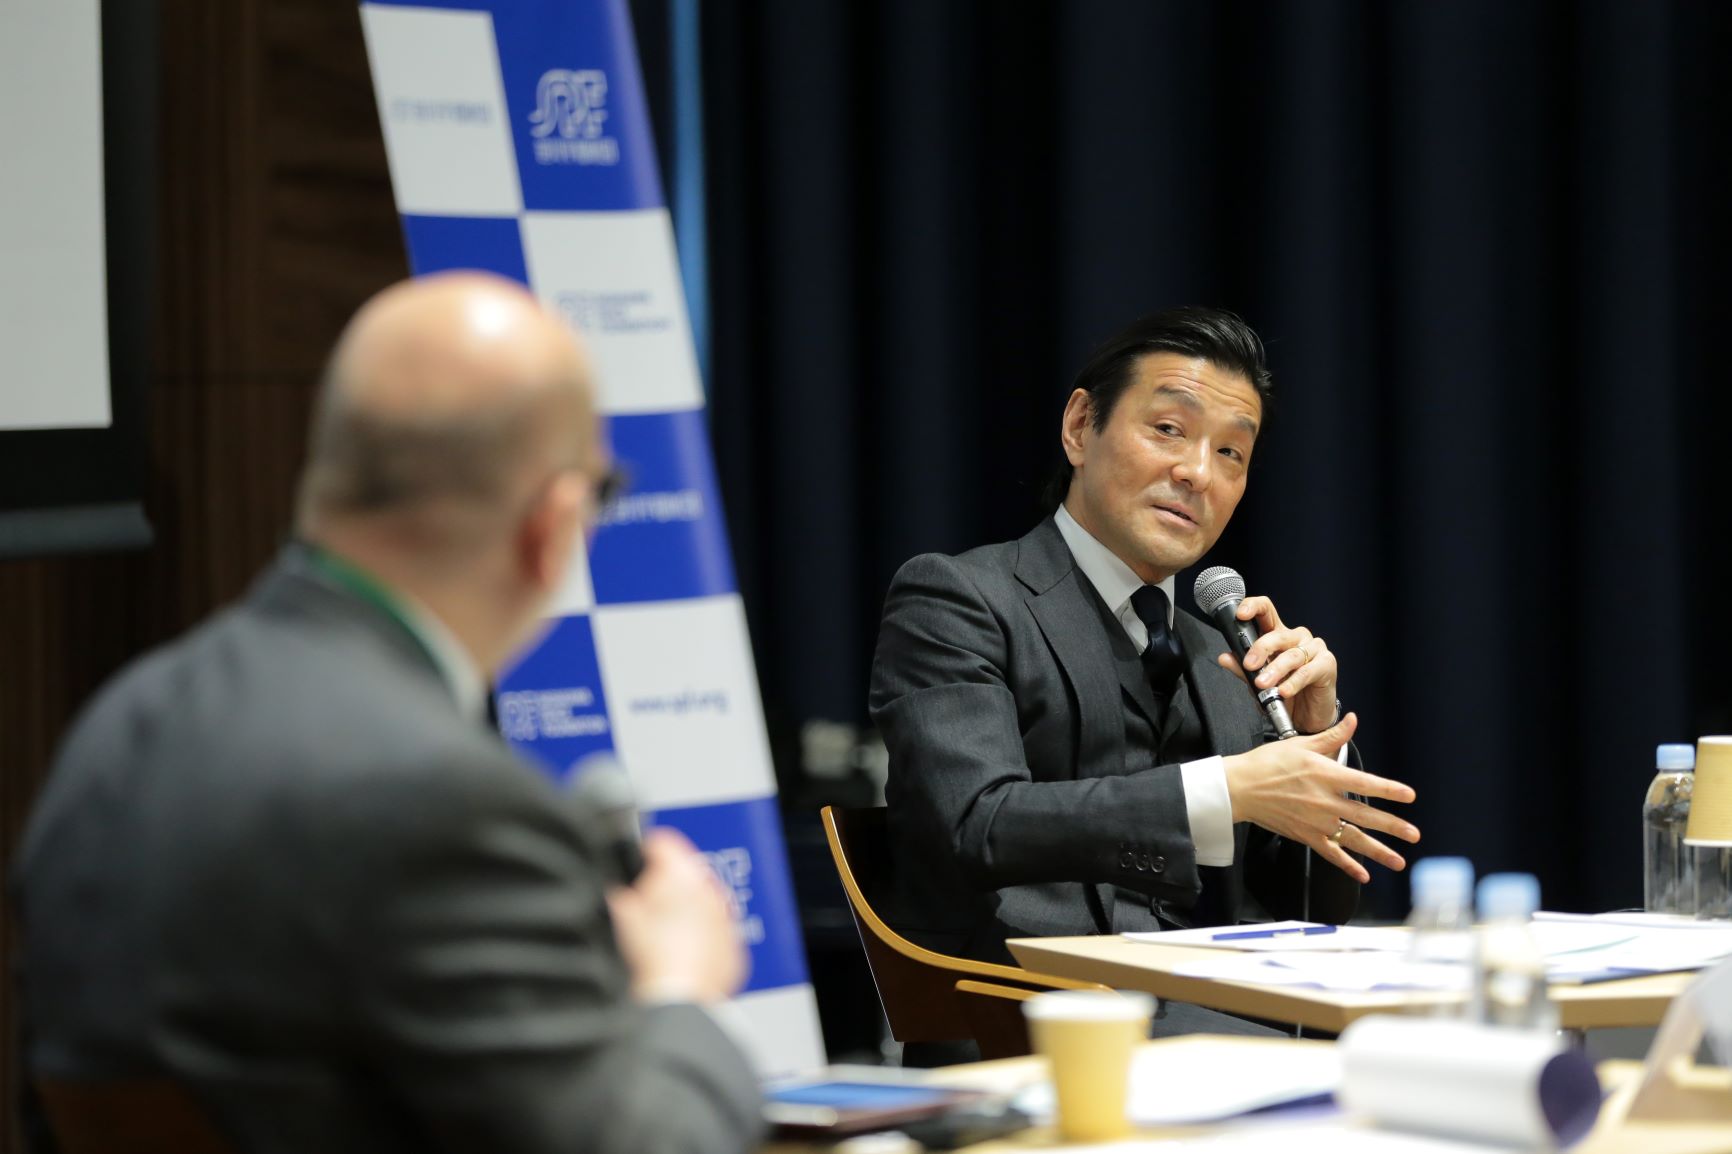 Professor Toshihiro Nakayama from the Graduate School of Media and Governance at Keio University